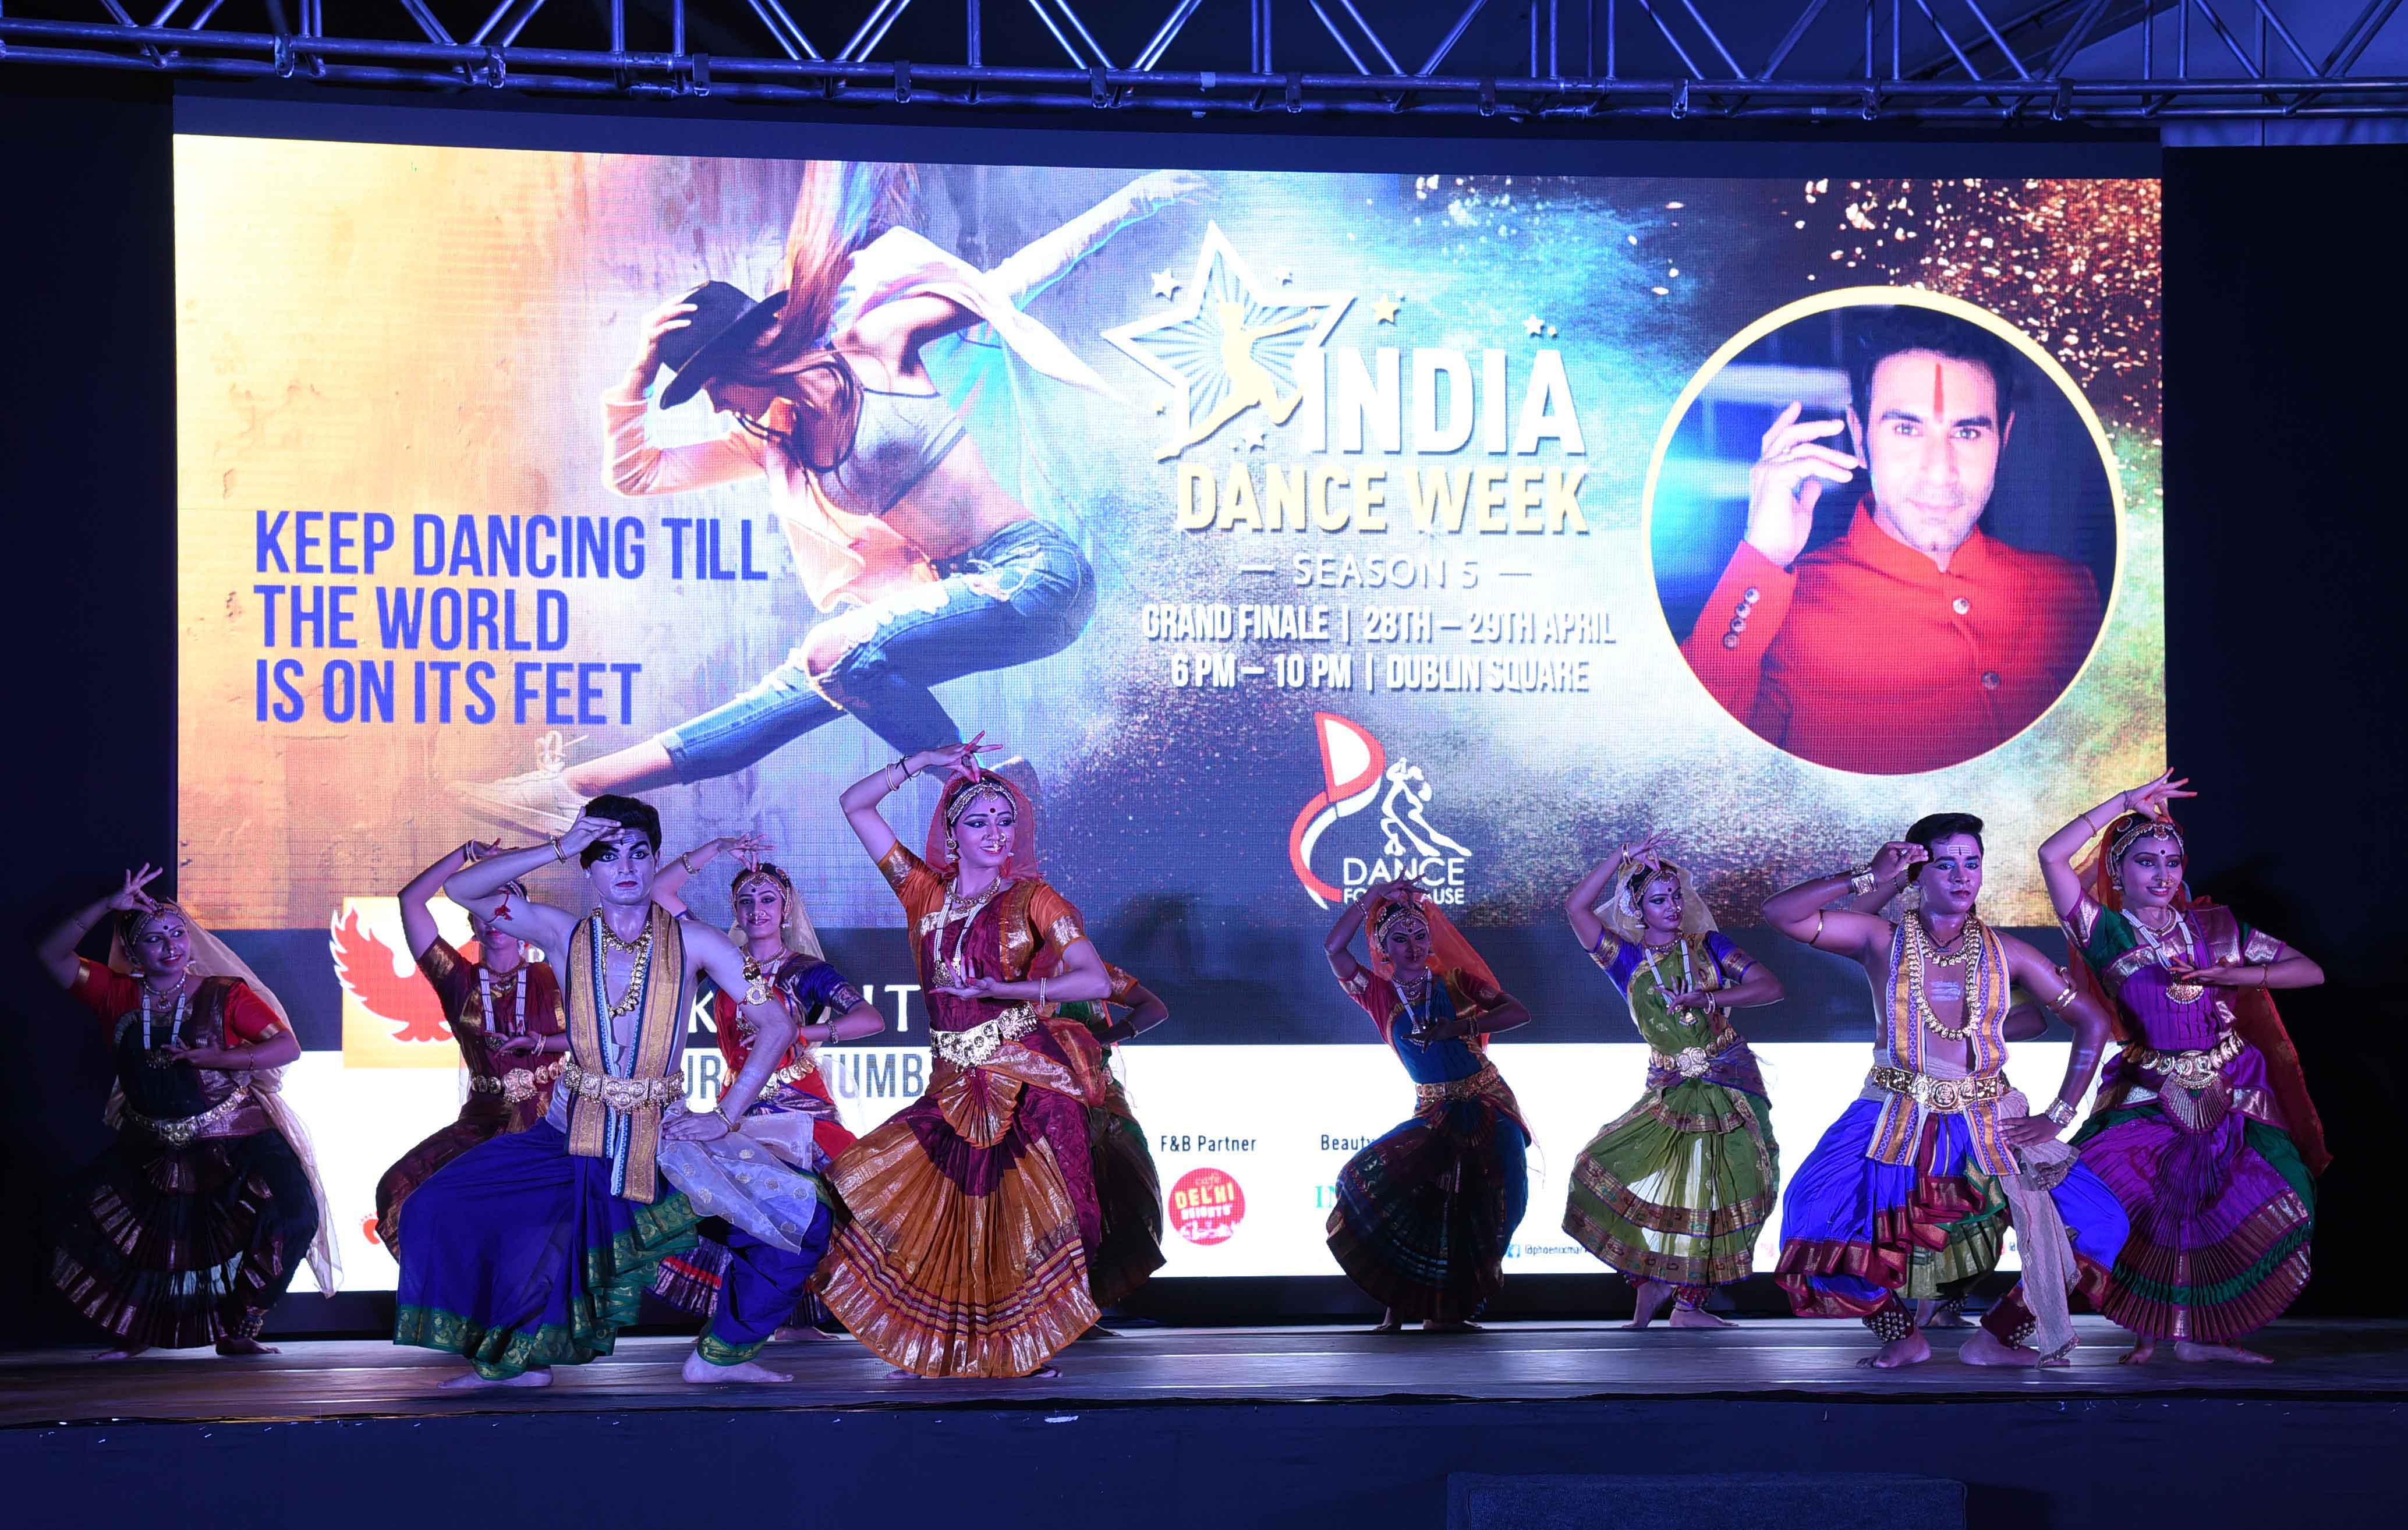 India Dance Week